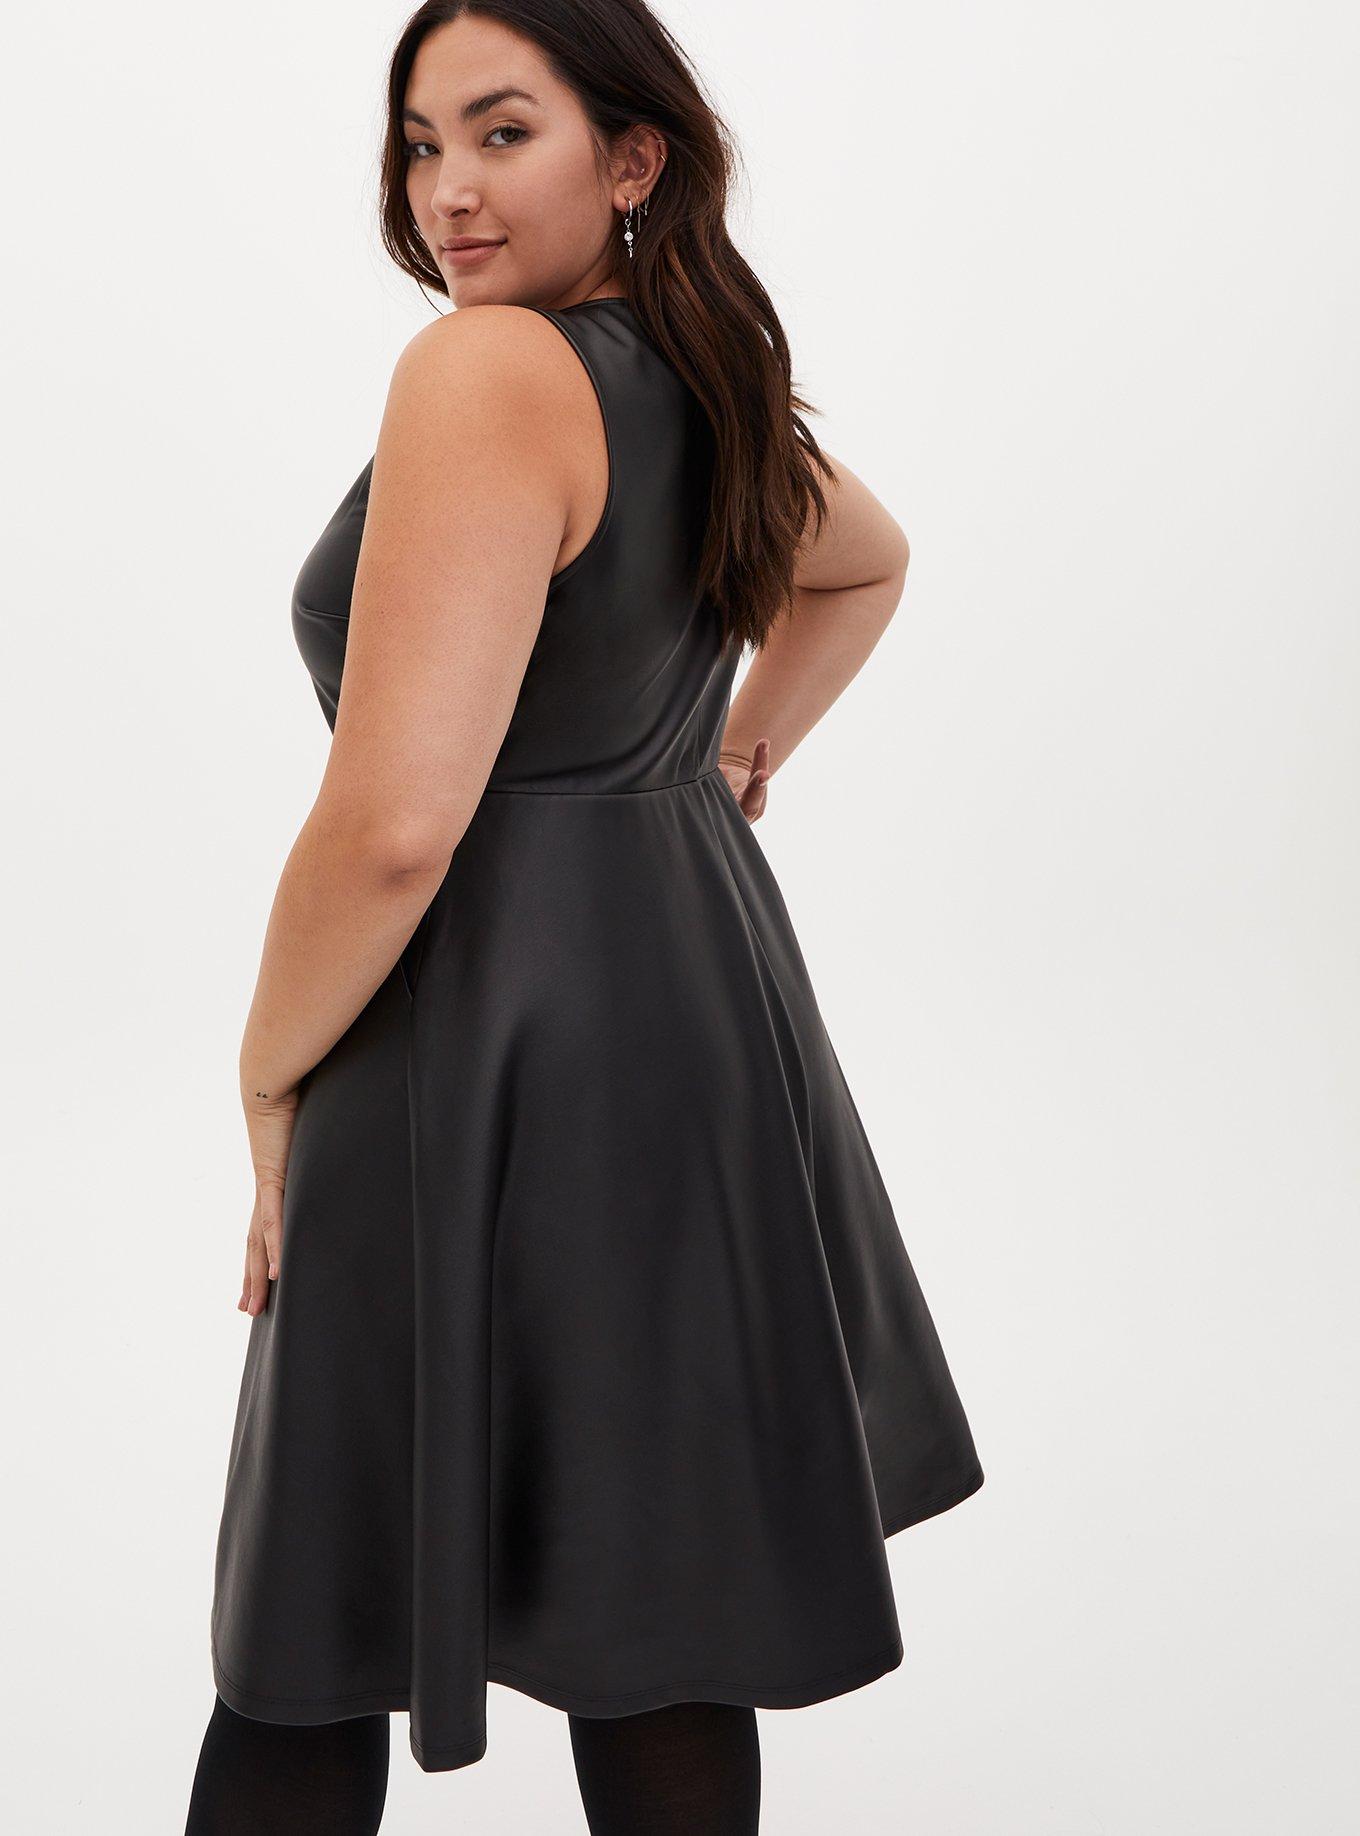 Torrid Black Sleeveless Textured Shift Midi Dress, Size 3 – The